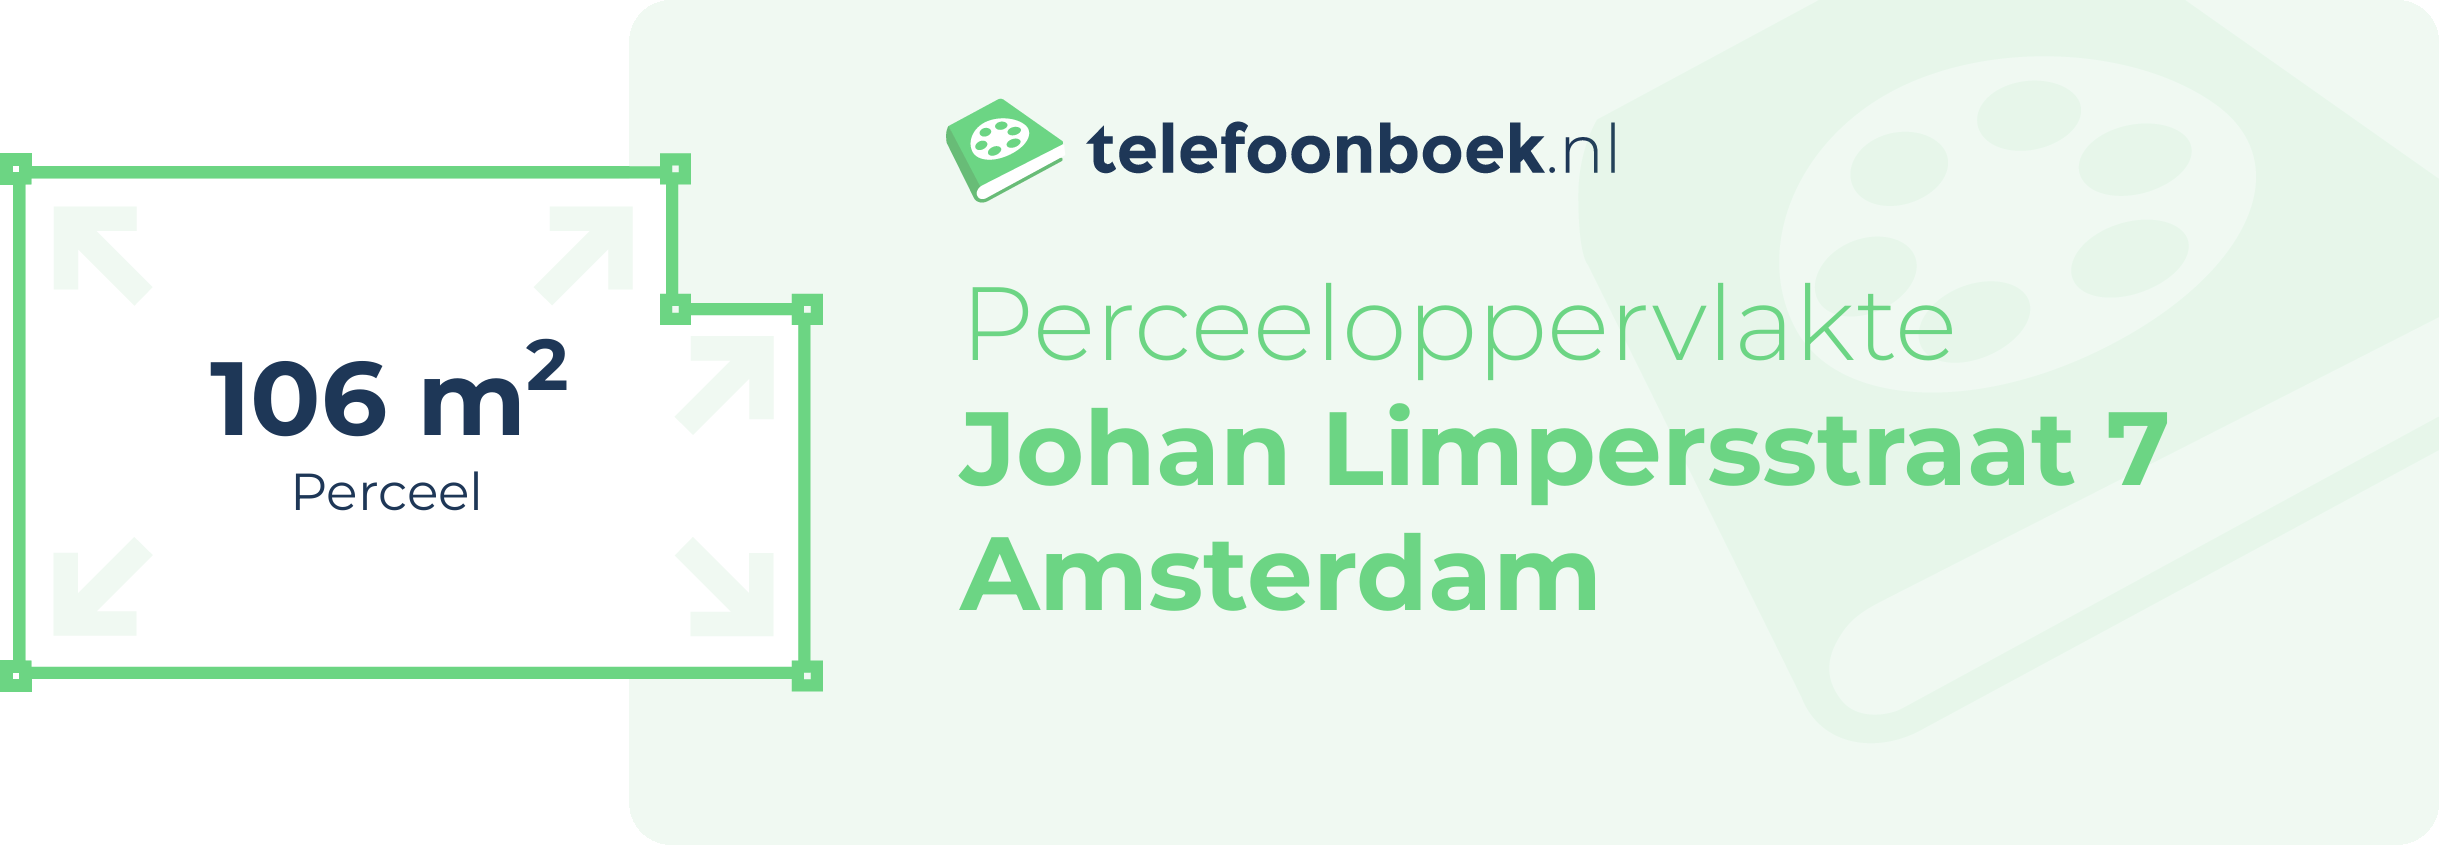 Perceeloppervlakte Johan Limpersstraat 7 Amsterdam